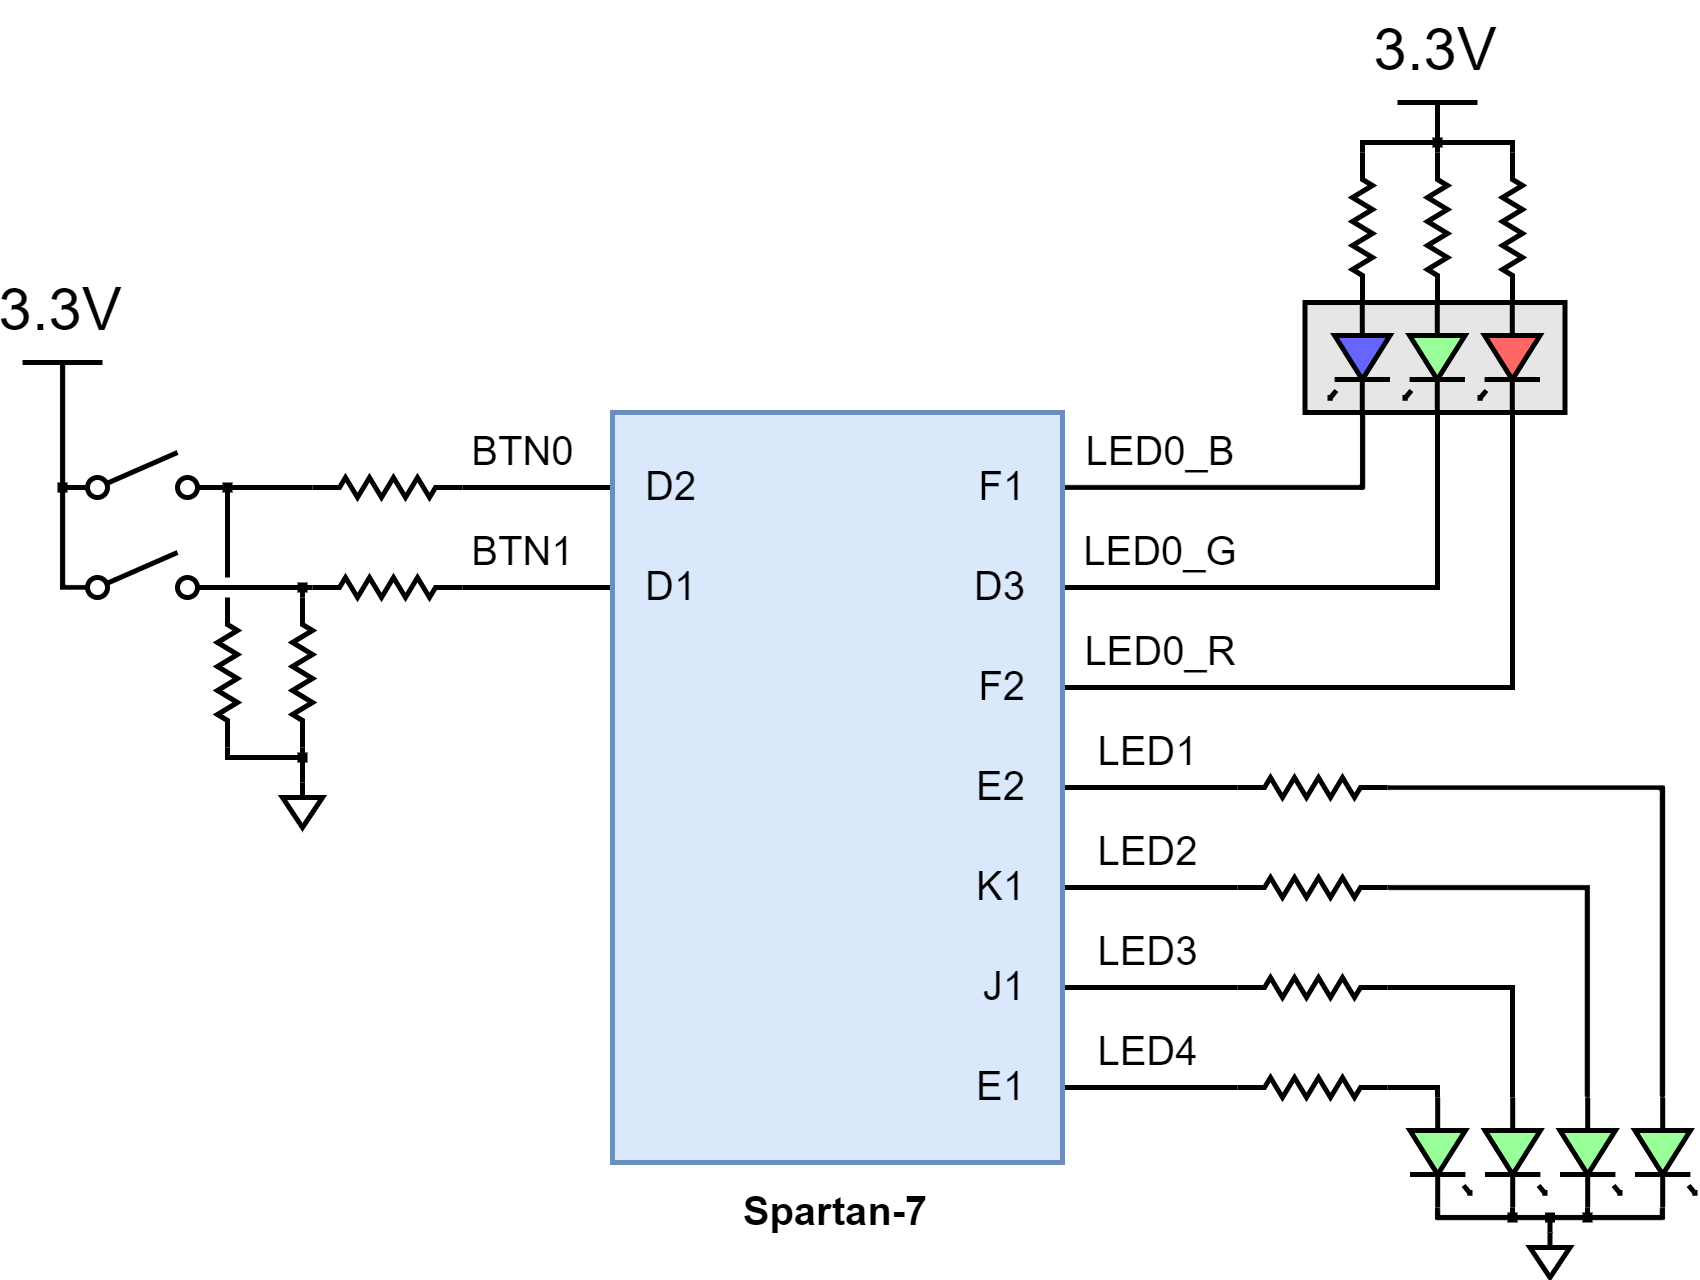 Figure 5.1 Cmod S7 Basic I/O